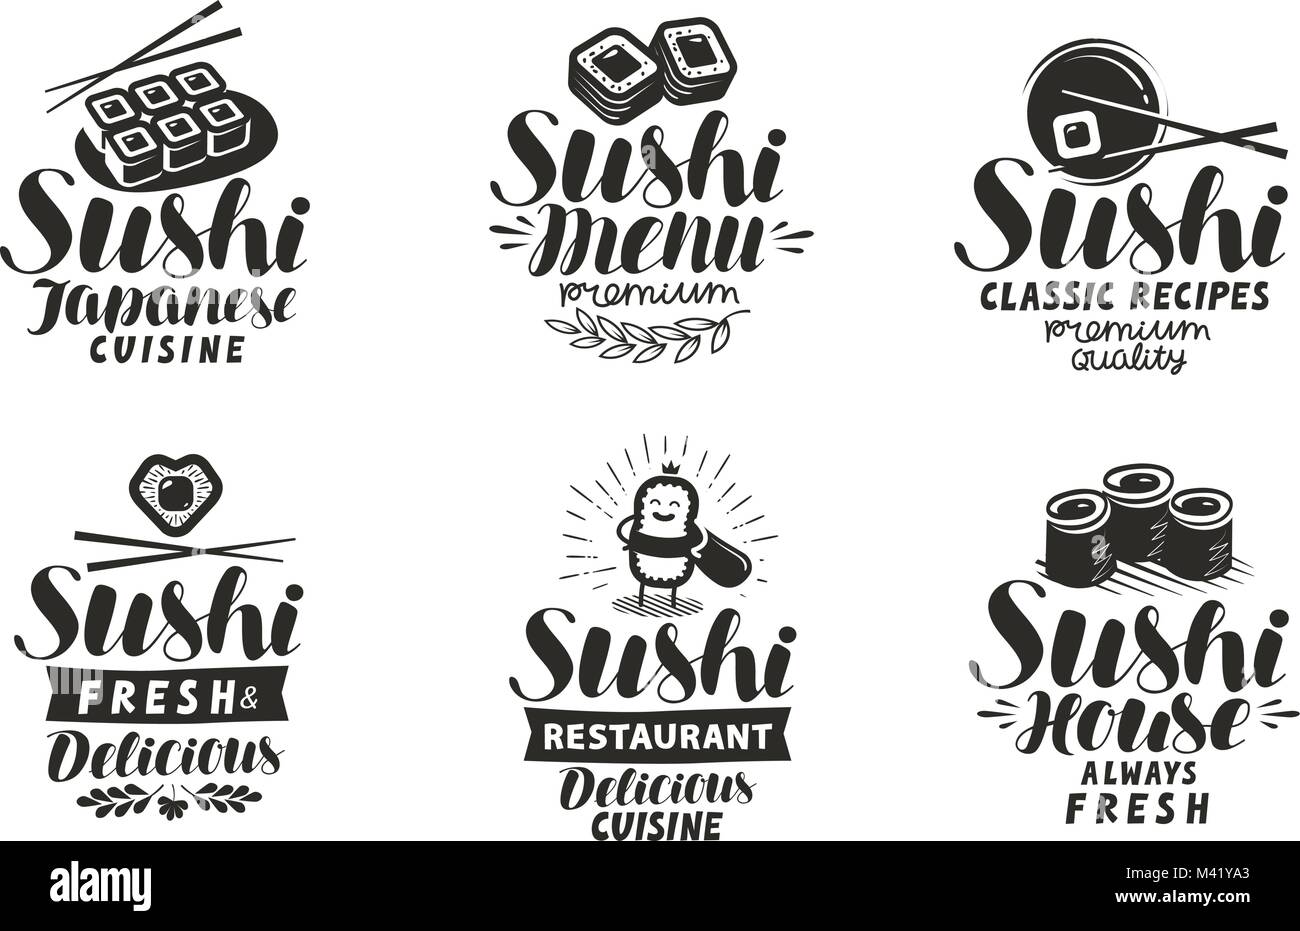 Sushi and Rolls logo or label. Japanese food set of symbols. Typographic design vector illustration Stock Vector